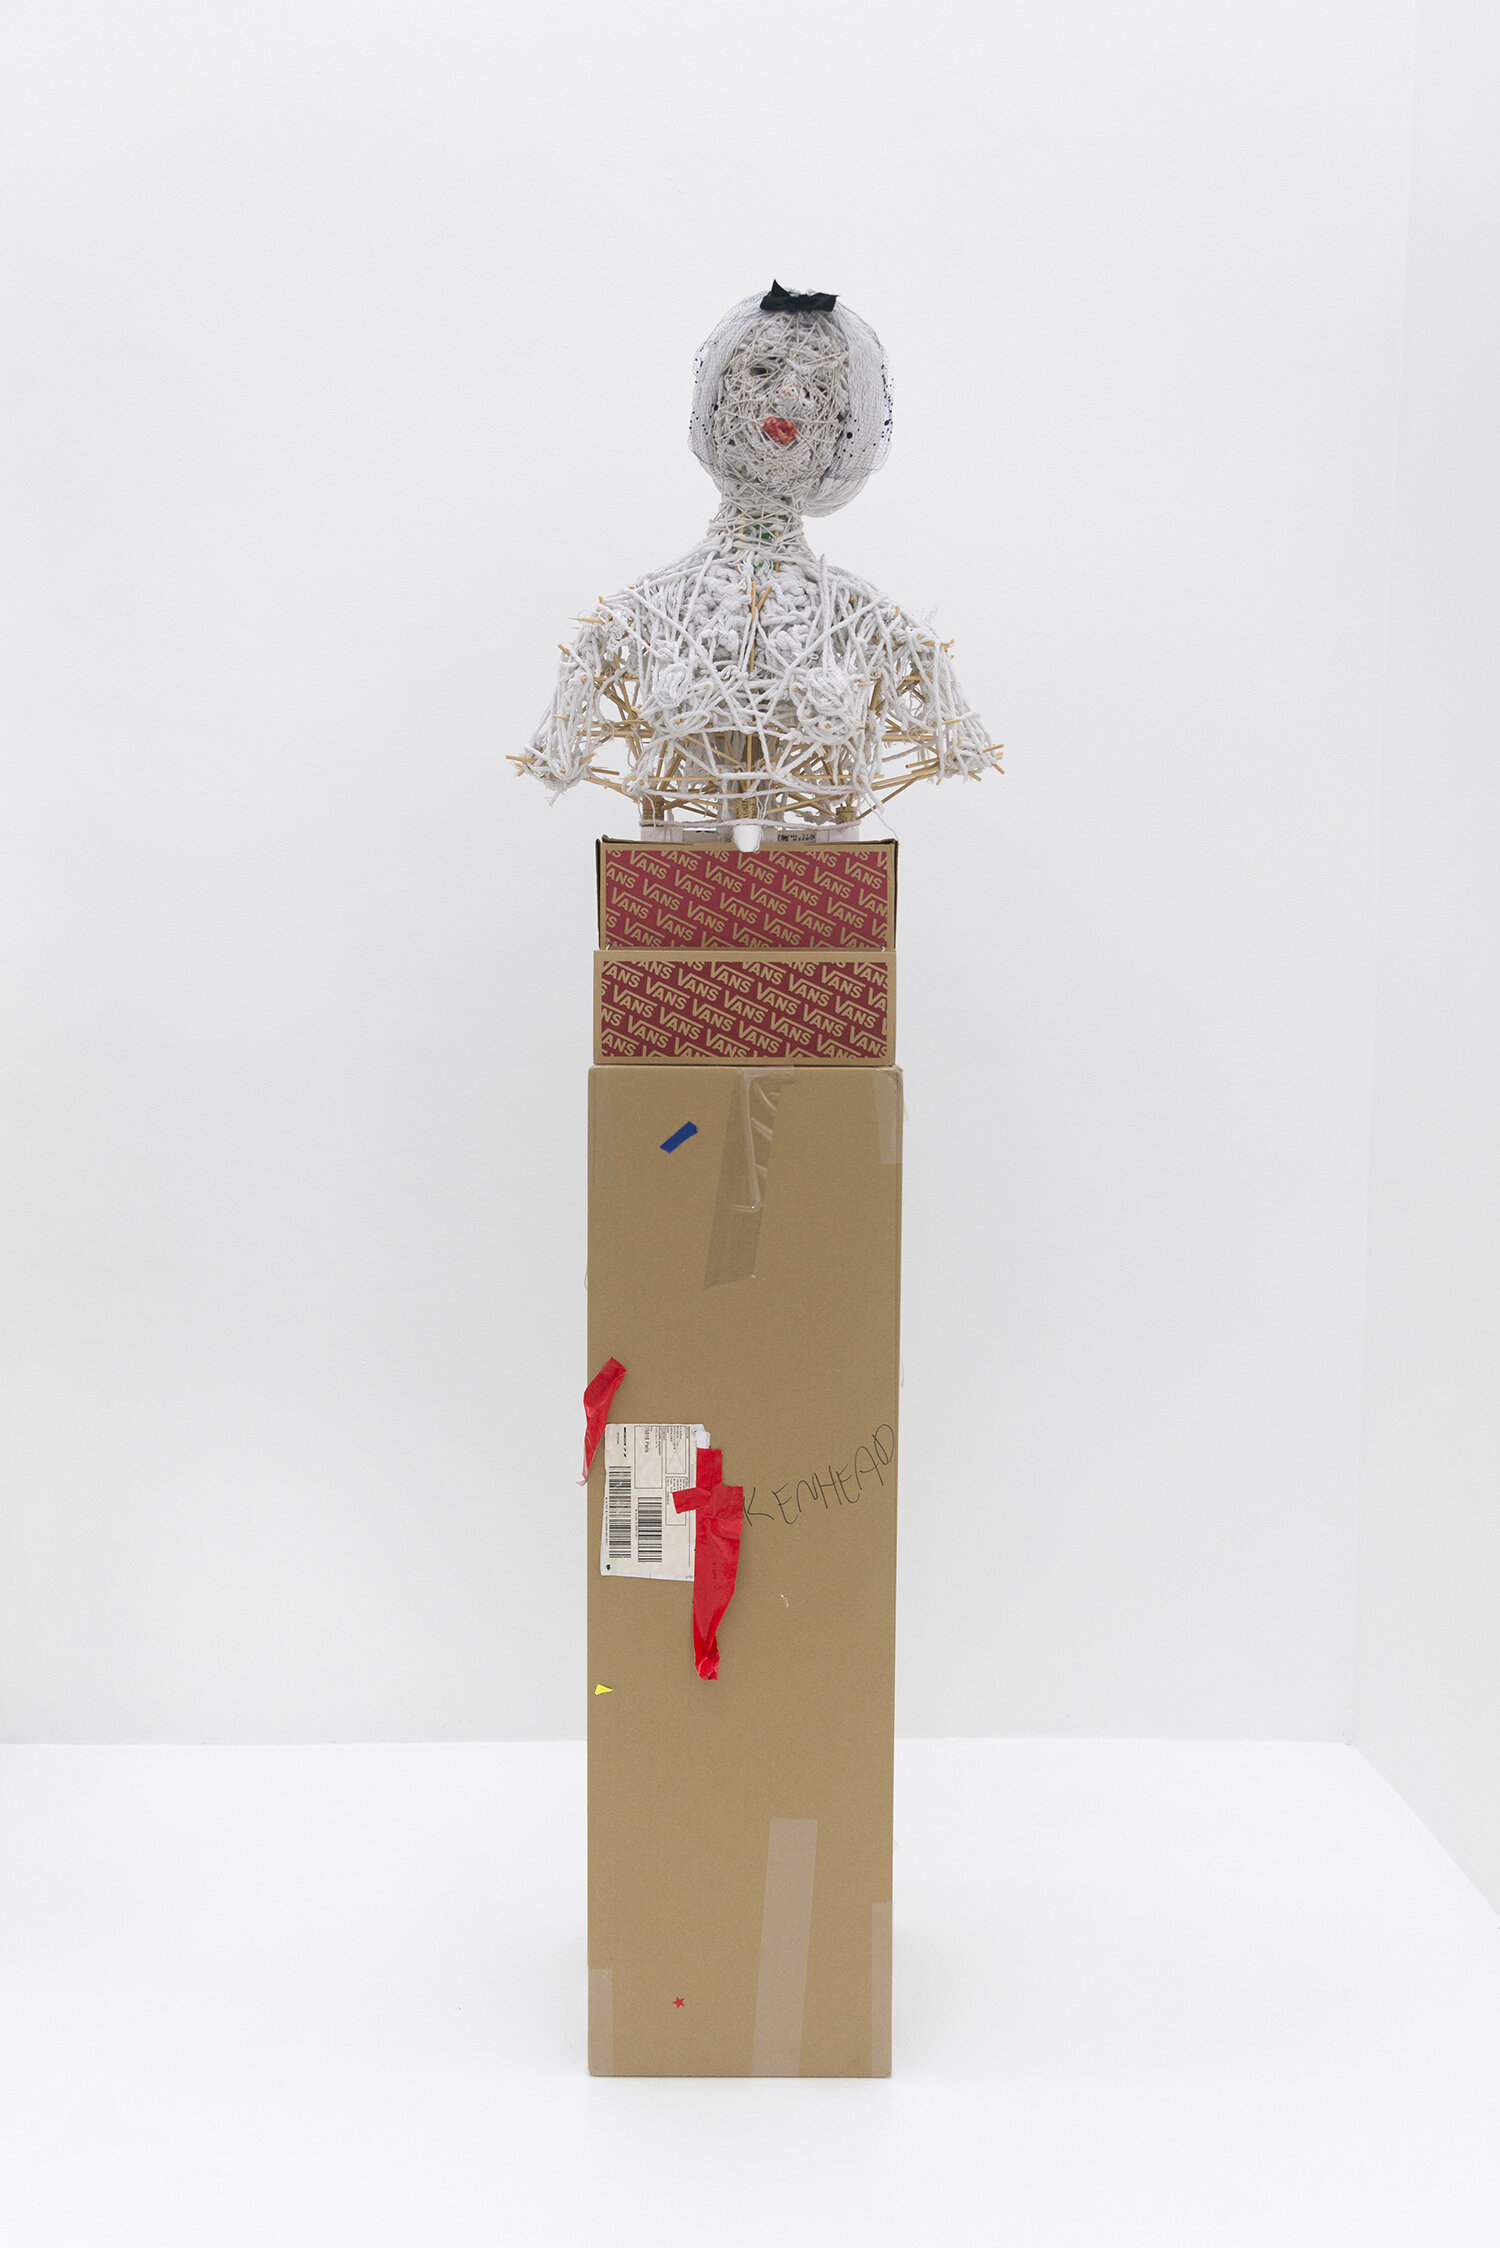   Monica , 2019. PVC, wood, cork, bamboo, plastic, cotton, wax, hat. Pedestal: cardboard, cotton twine. 